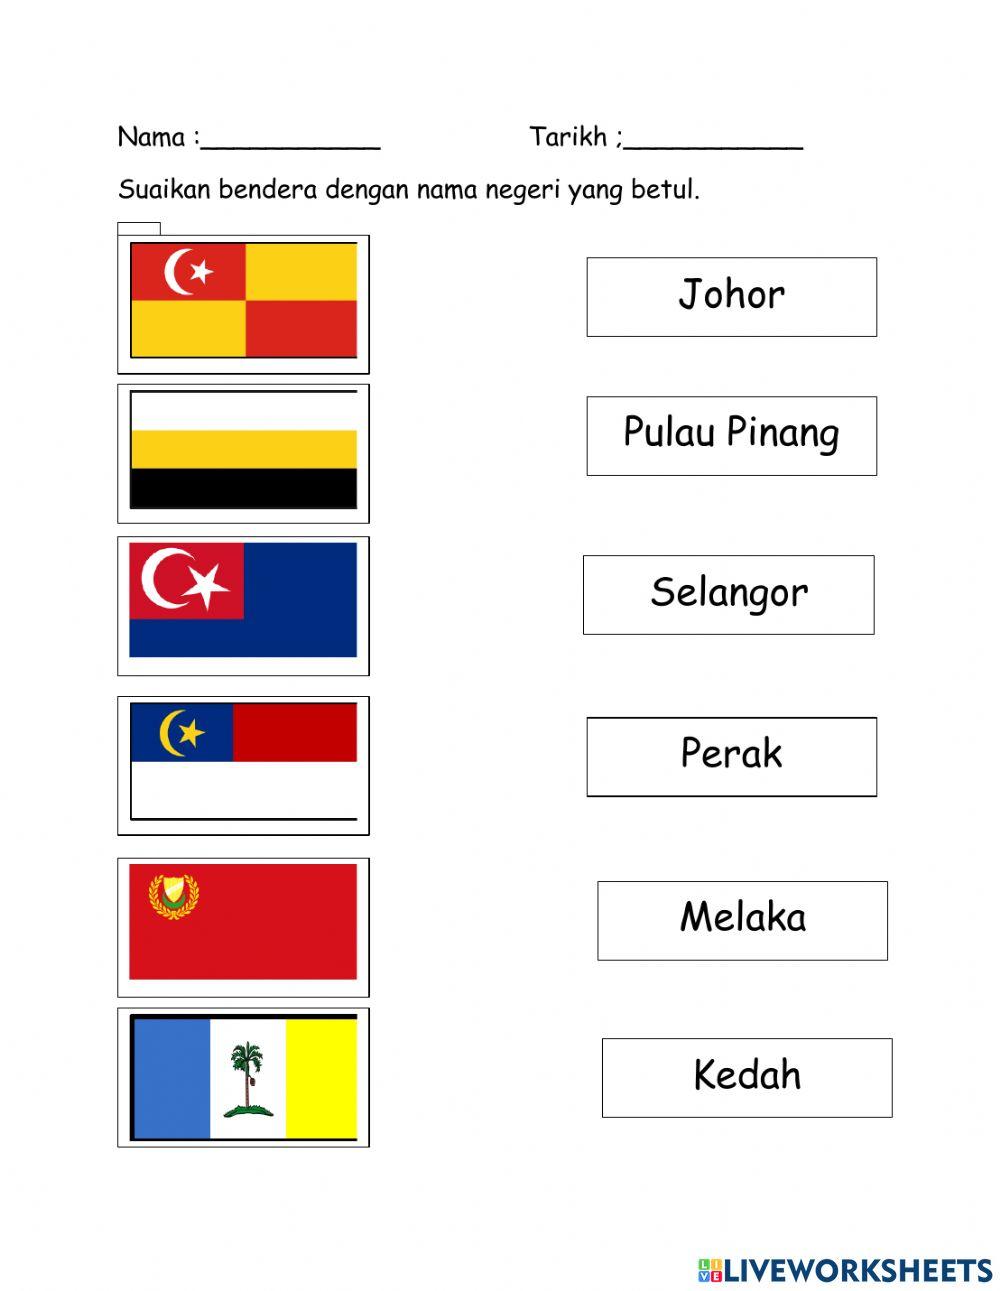 Negeri negeri di Malaysia